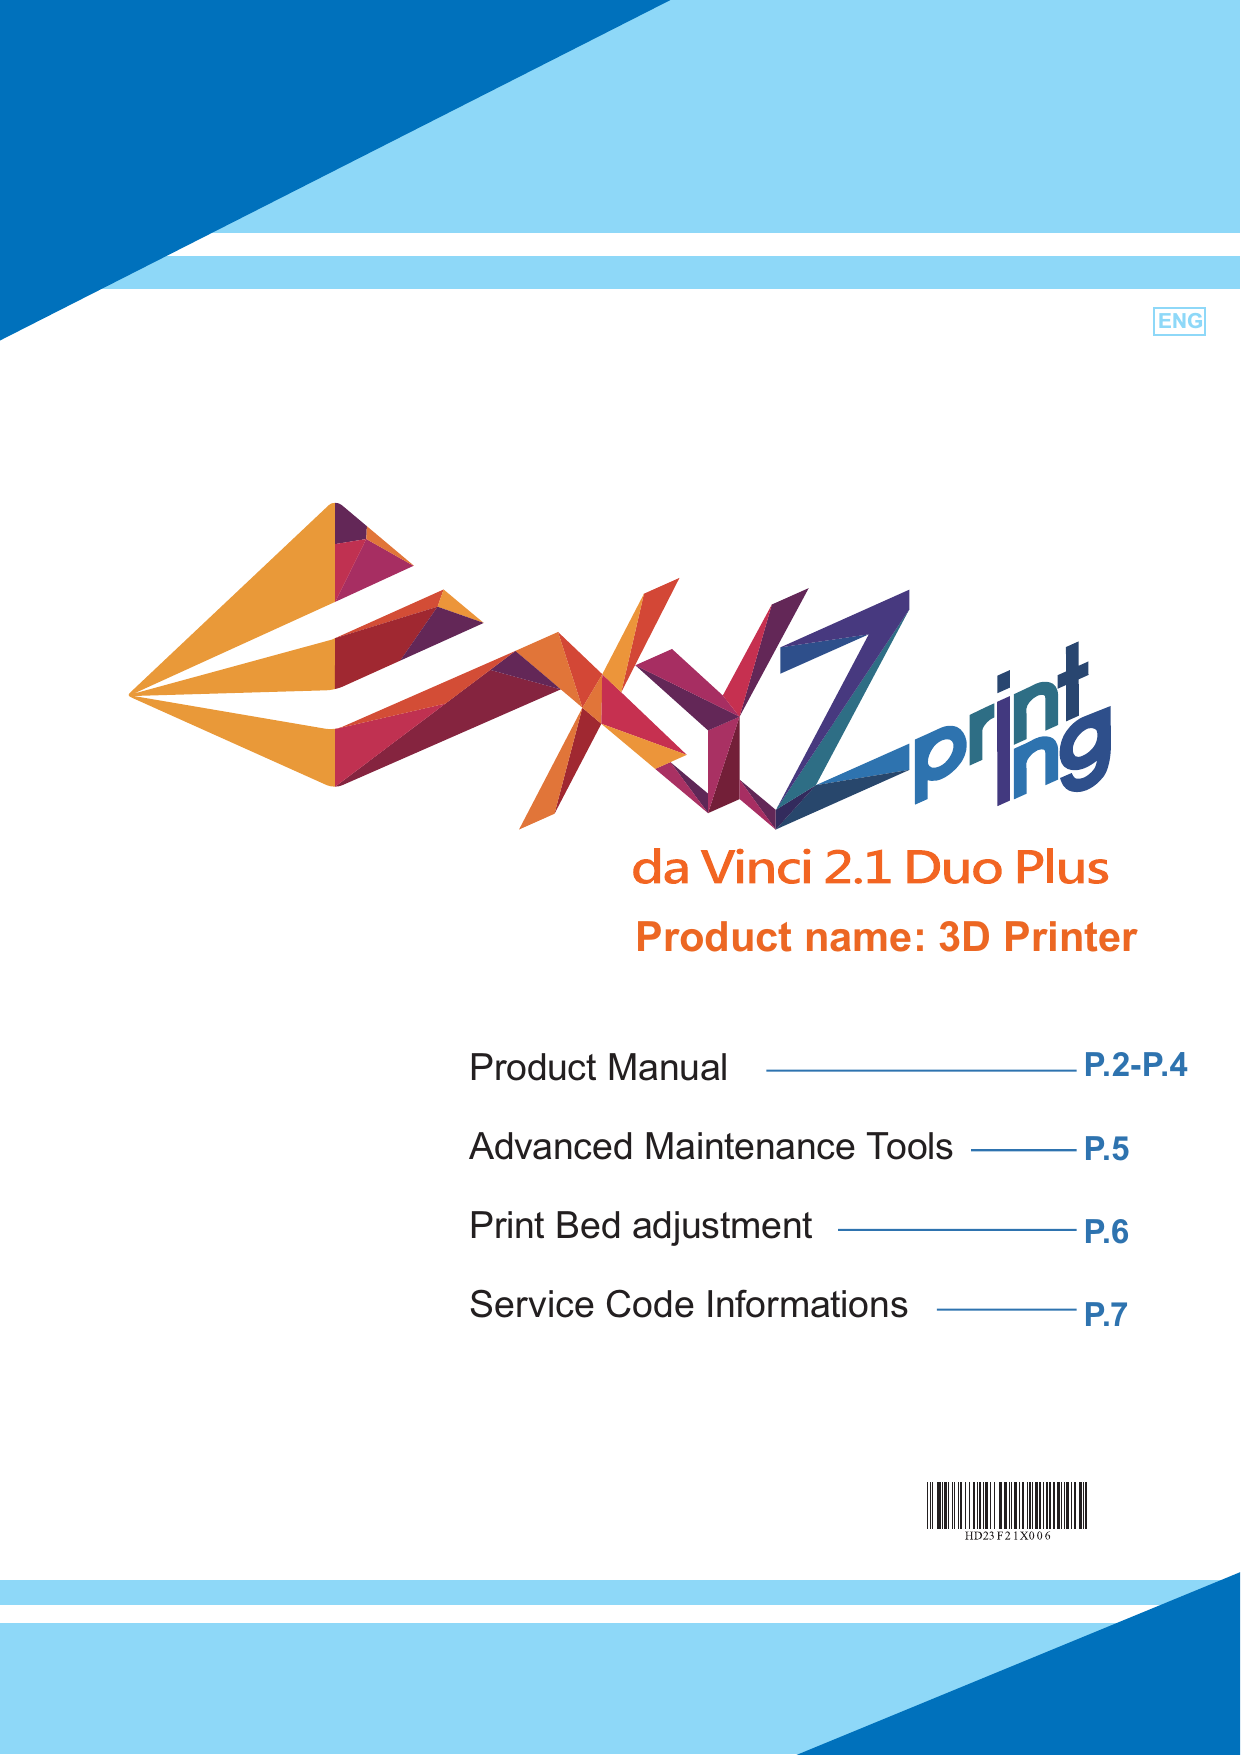 -1-ENGProduct ManualAdvanced Maintenance ToolsPrint Bed adjustmentService Code InformationsP. 2- P. 4P. 5P.6P.7ENGProduct name: 3D Printer